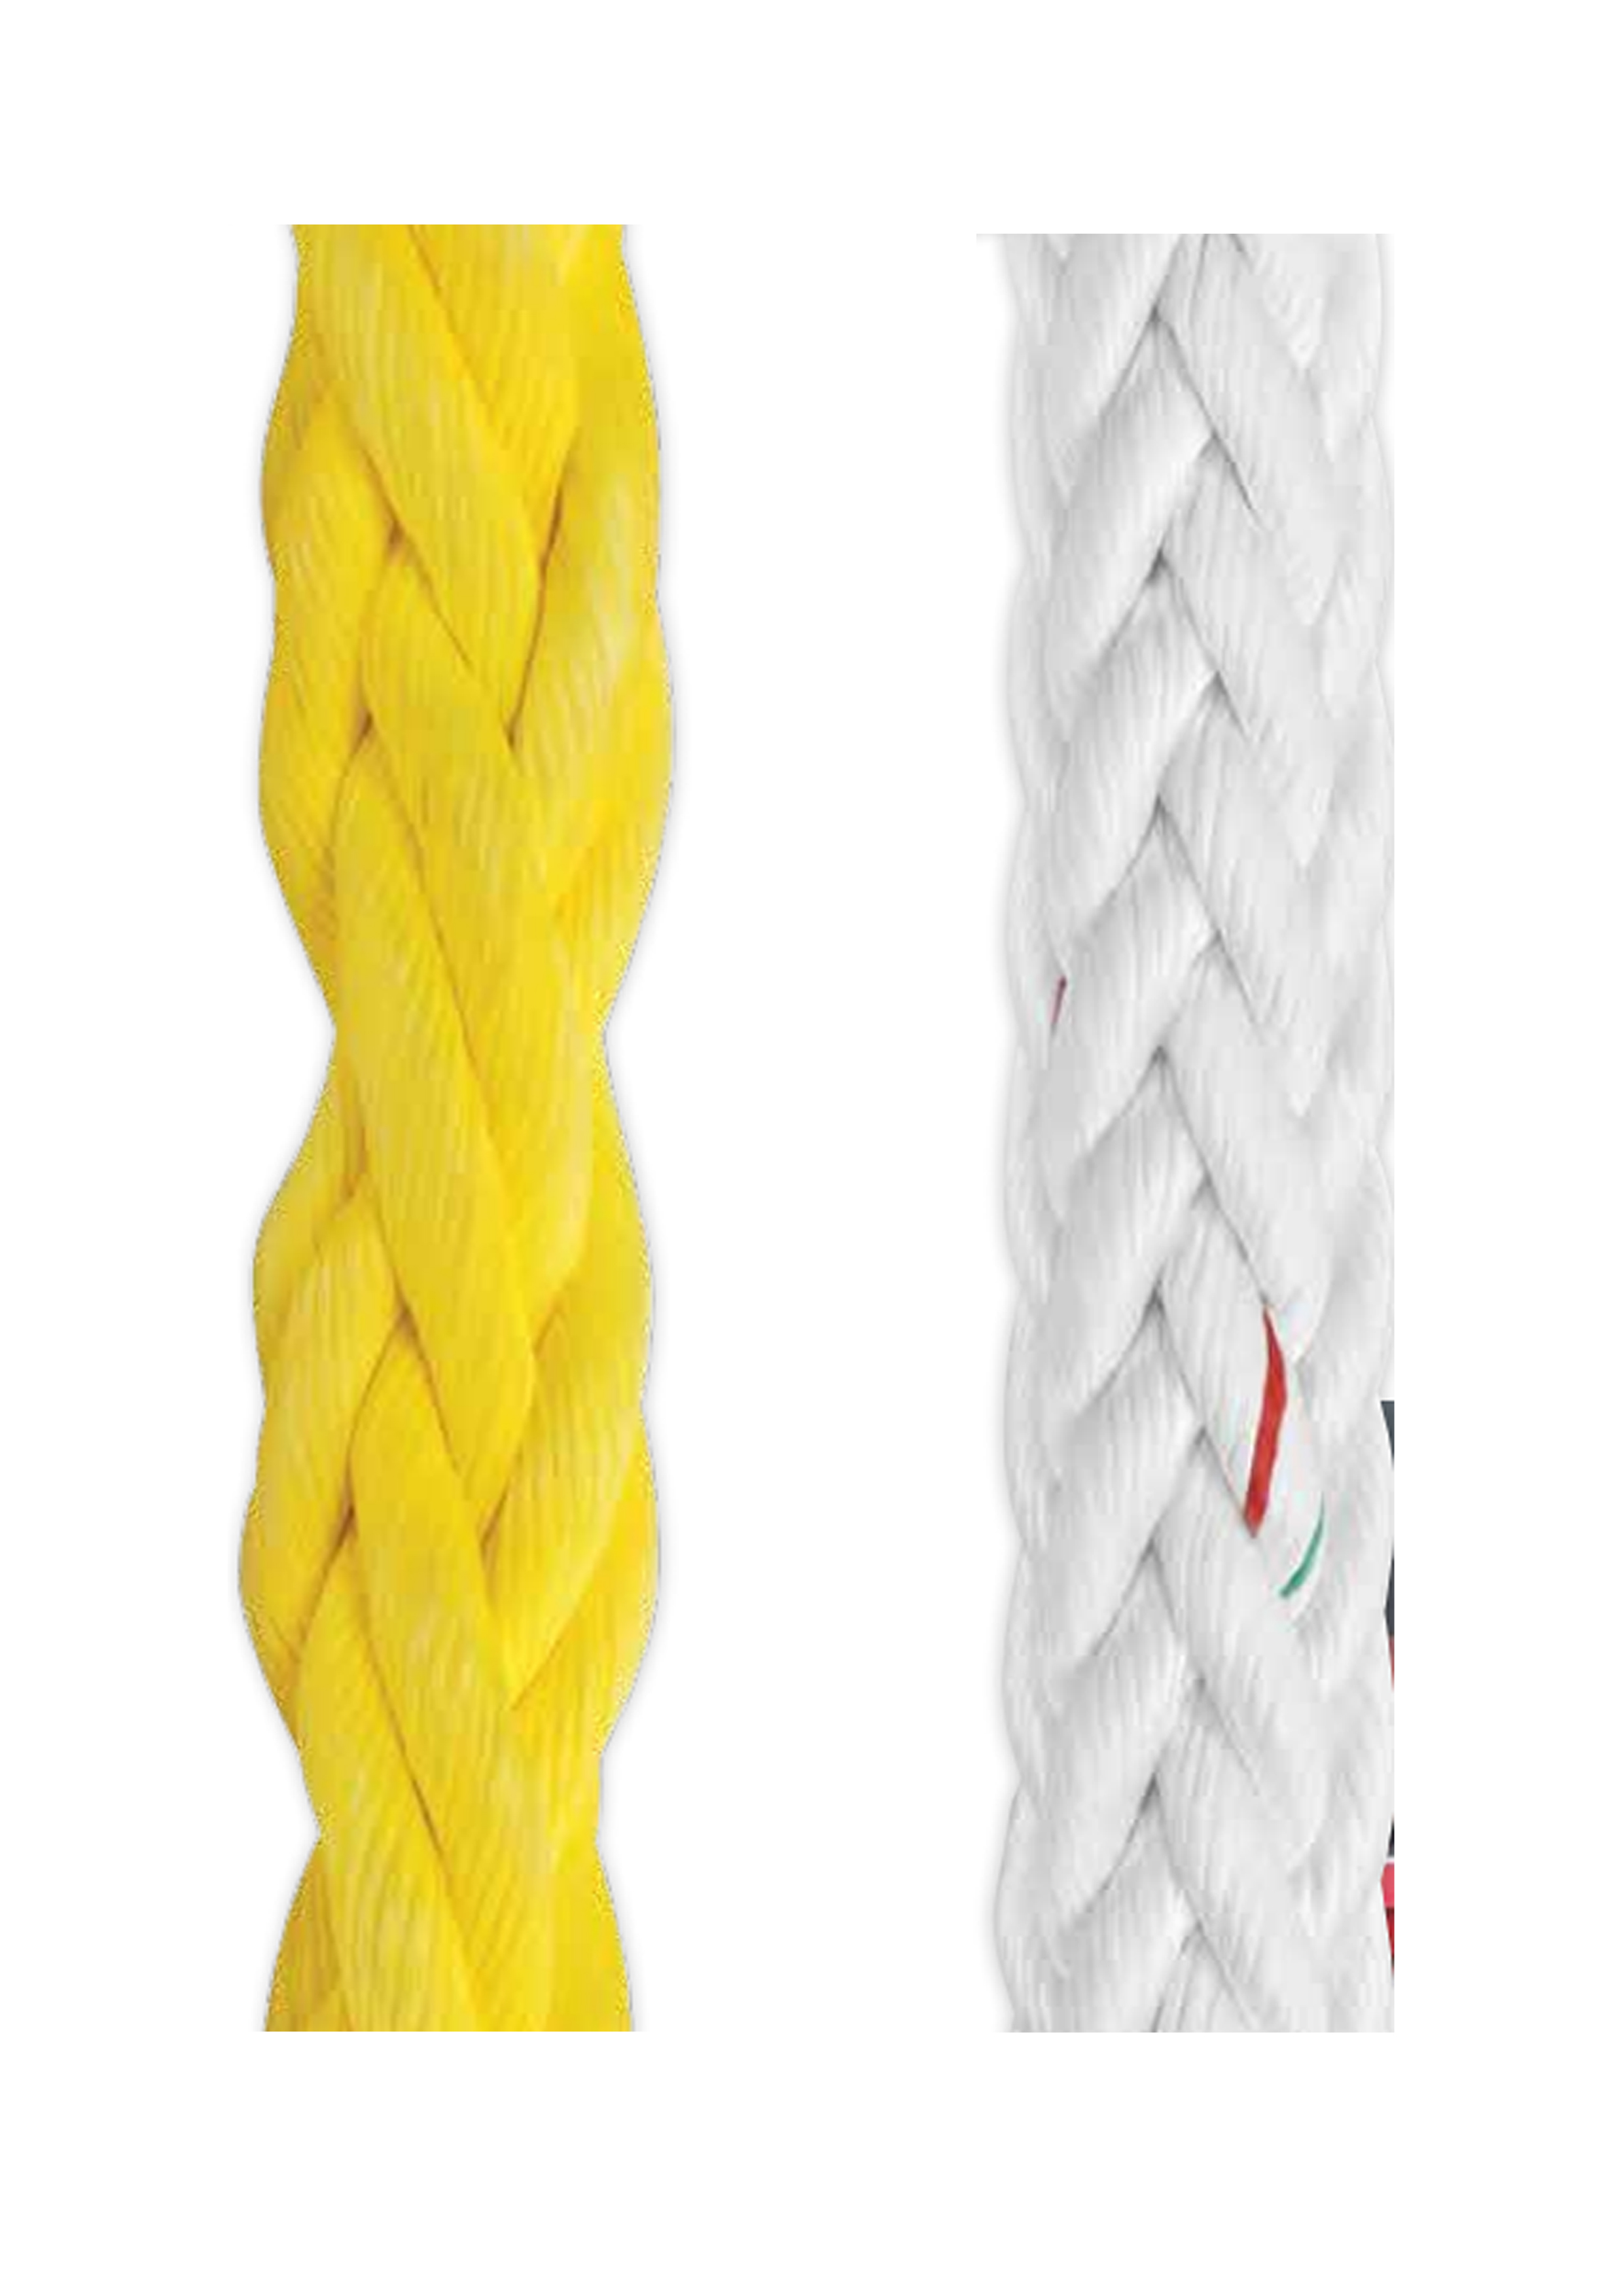 Mooring-PP-Nylon Rope